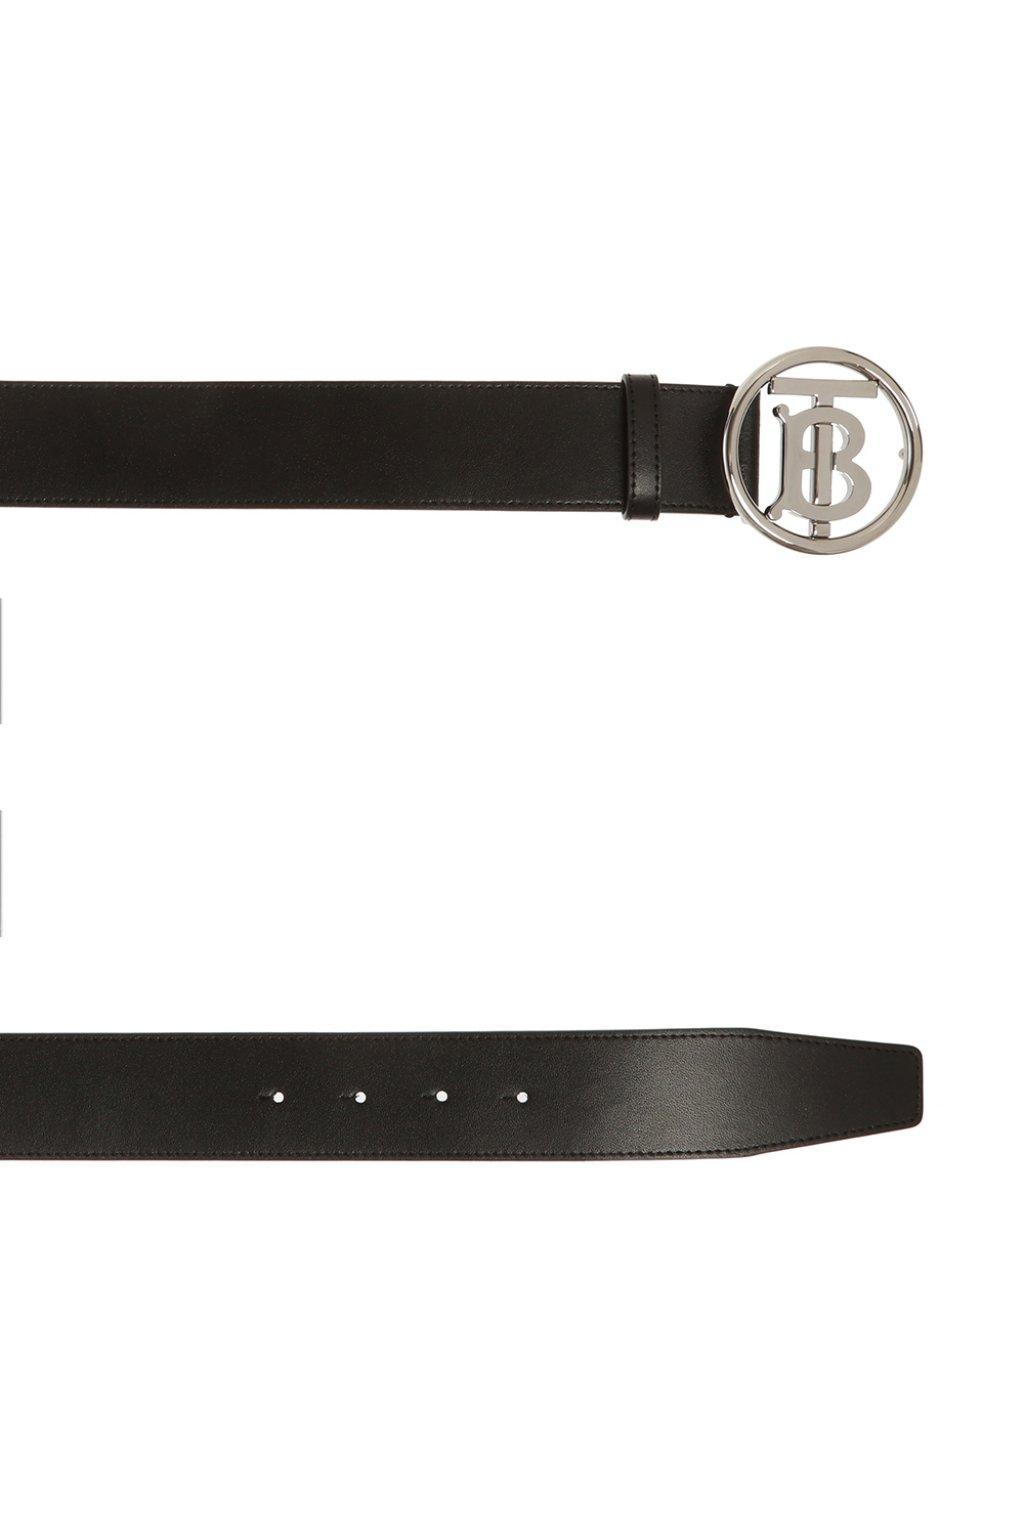 Burberry Leather Logo Belt Black - Lyst